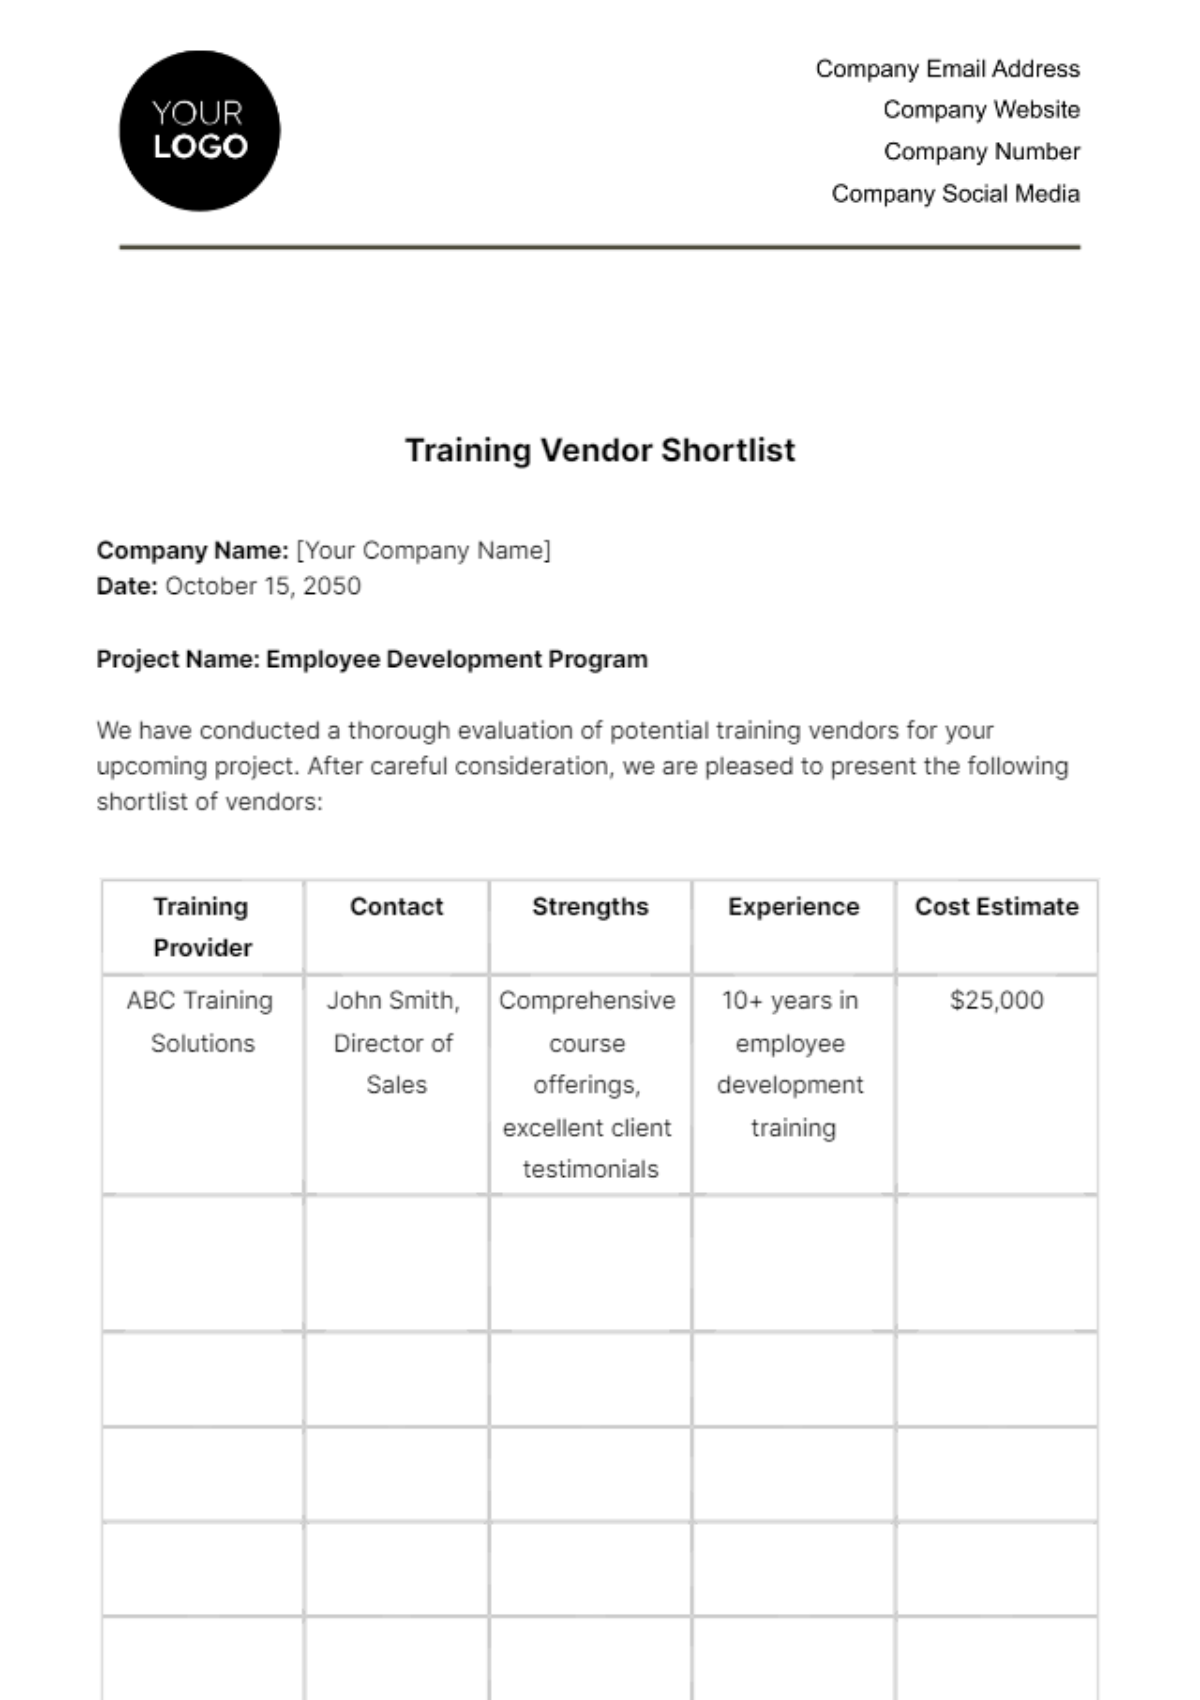 Free Training Vendor Shortlist HR Template